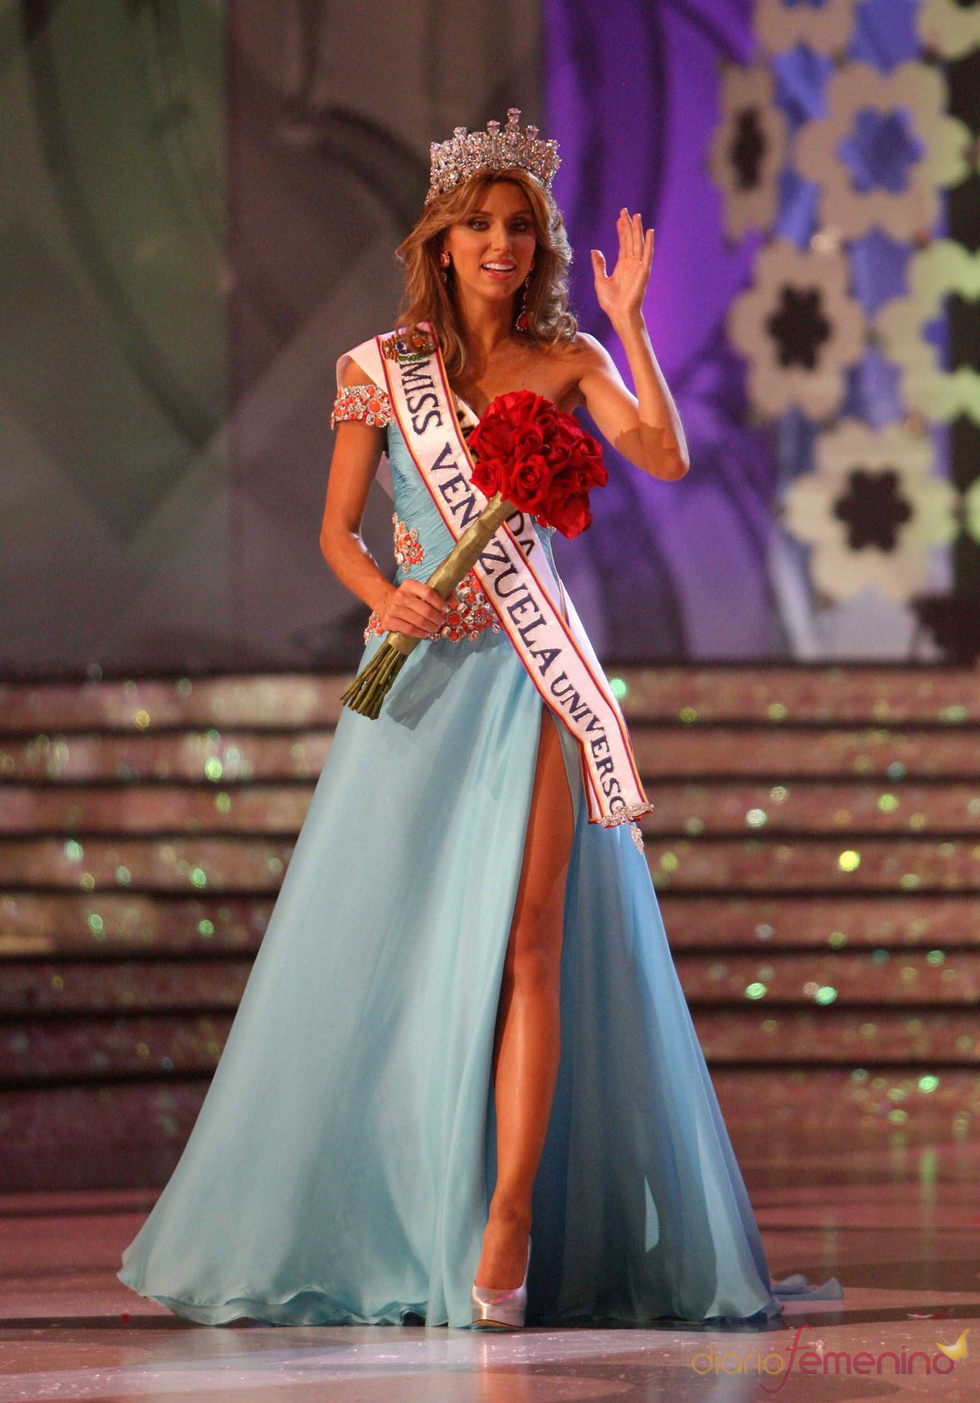 Vanessa Goncalves, Miss Venezuela 2010